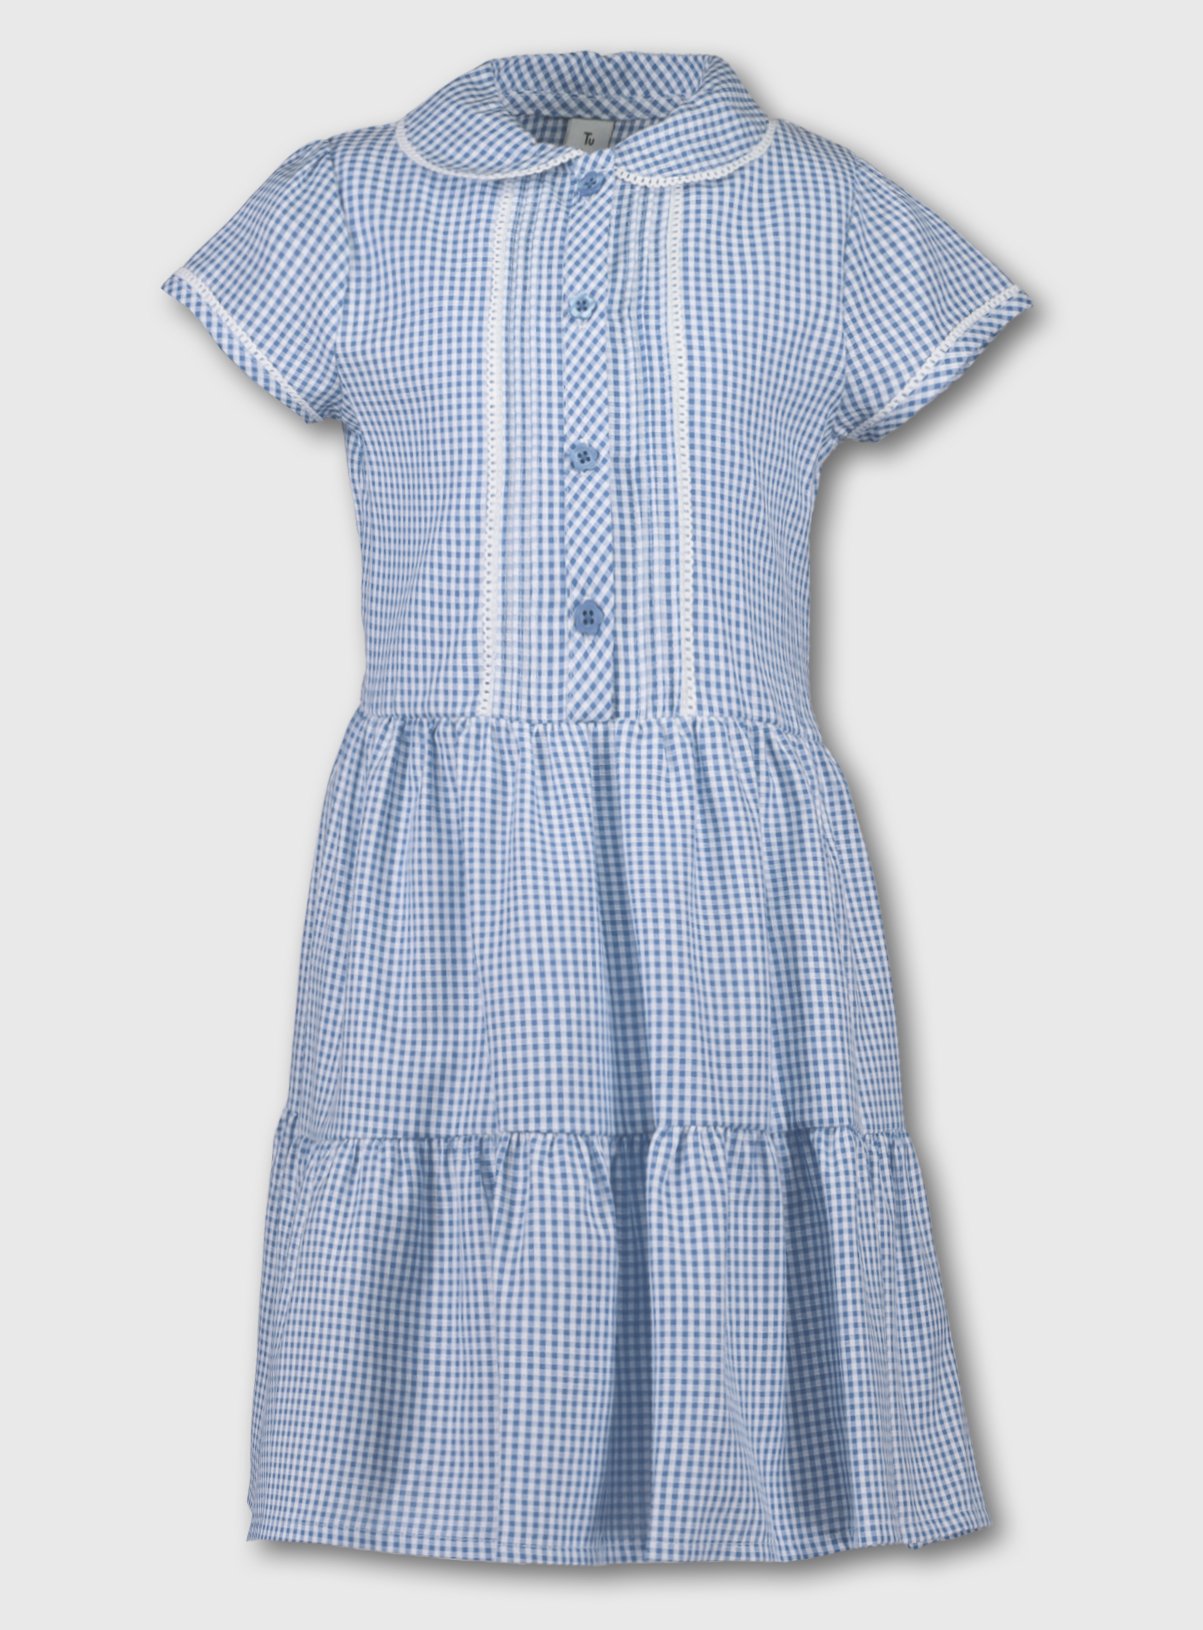 blue checked school dress